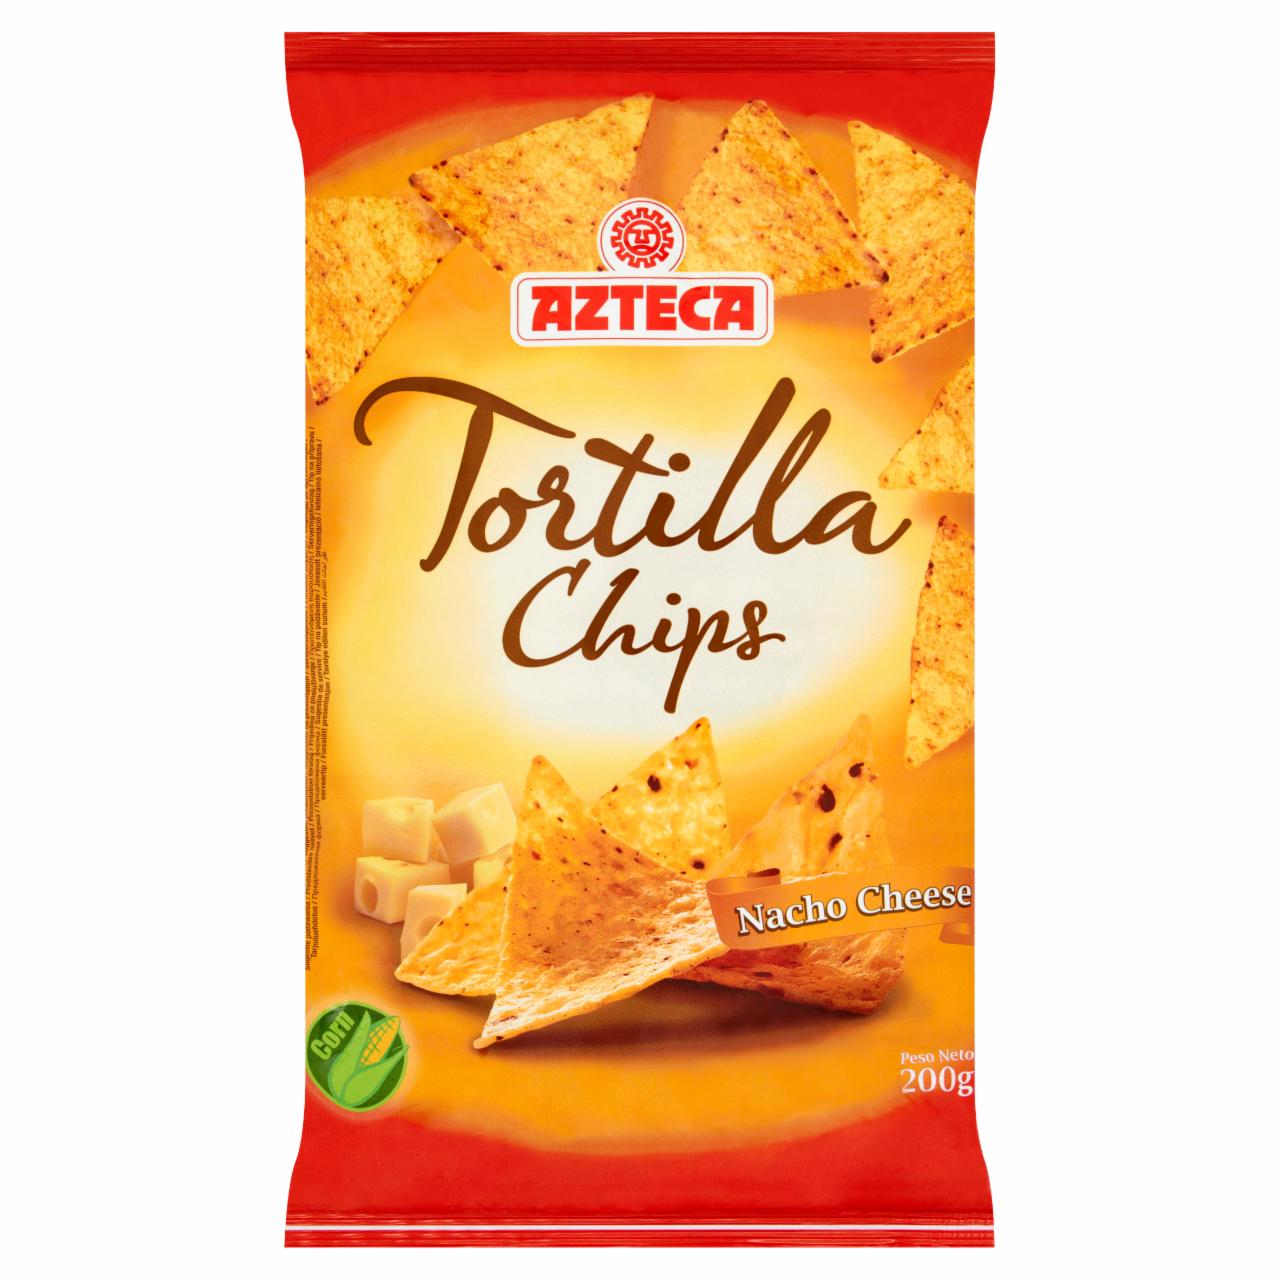 Zdjęcia - Azteca Nacho Cheese Tortilla Chips 200 g